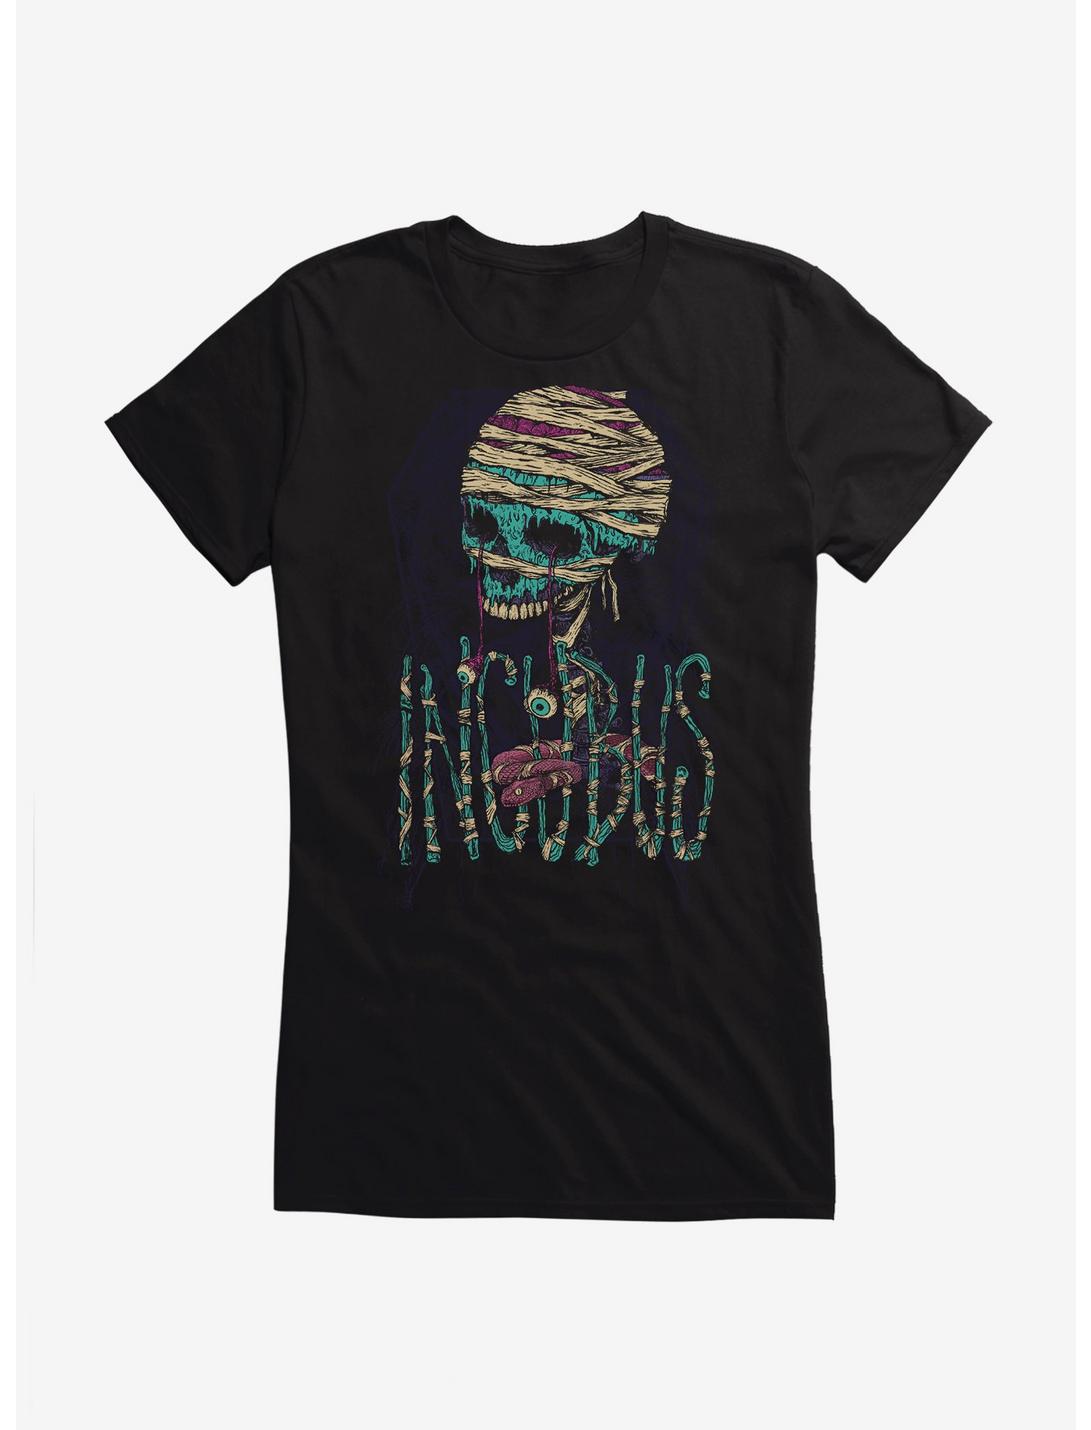 Incubus Mummified Tour Girls T-Shirt, BLACK, hi-res